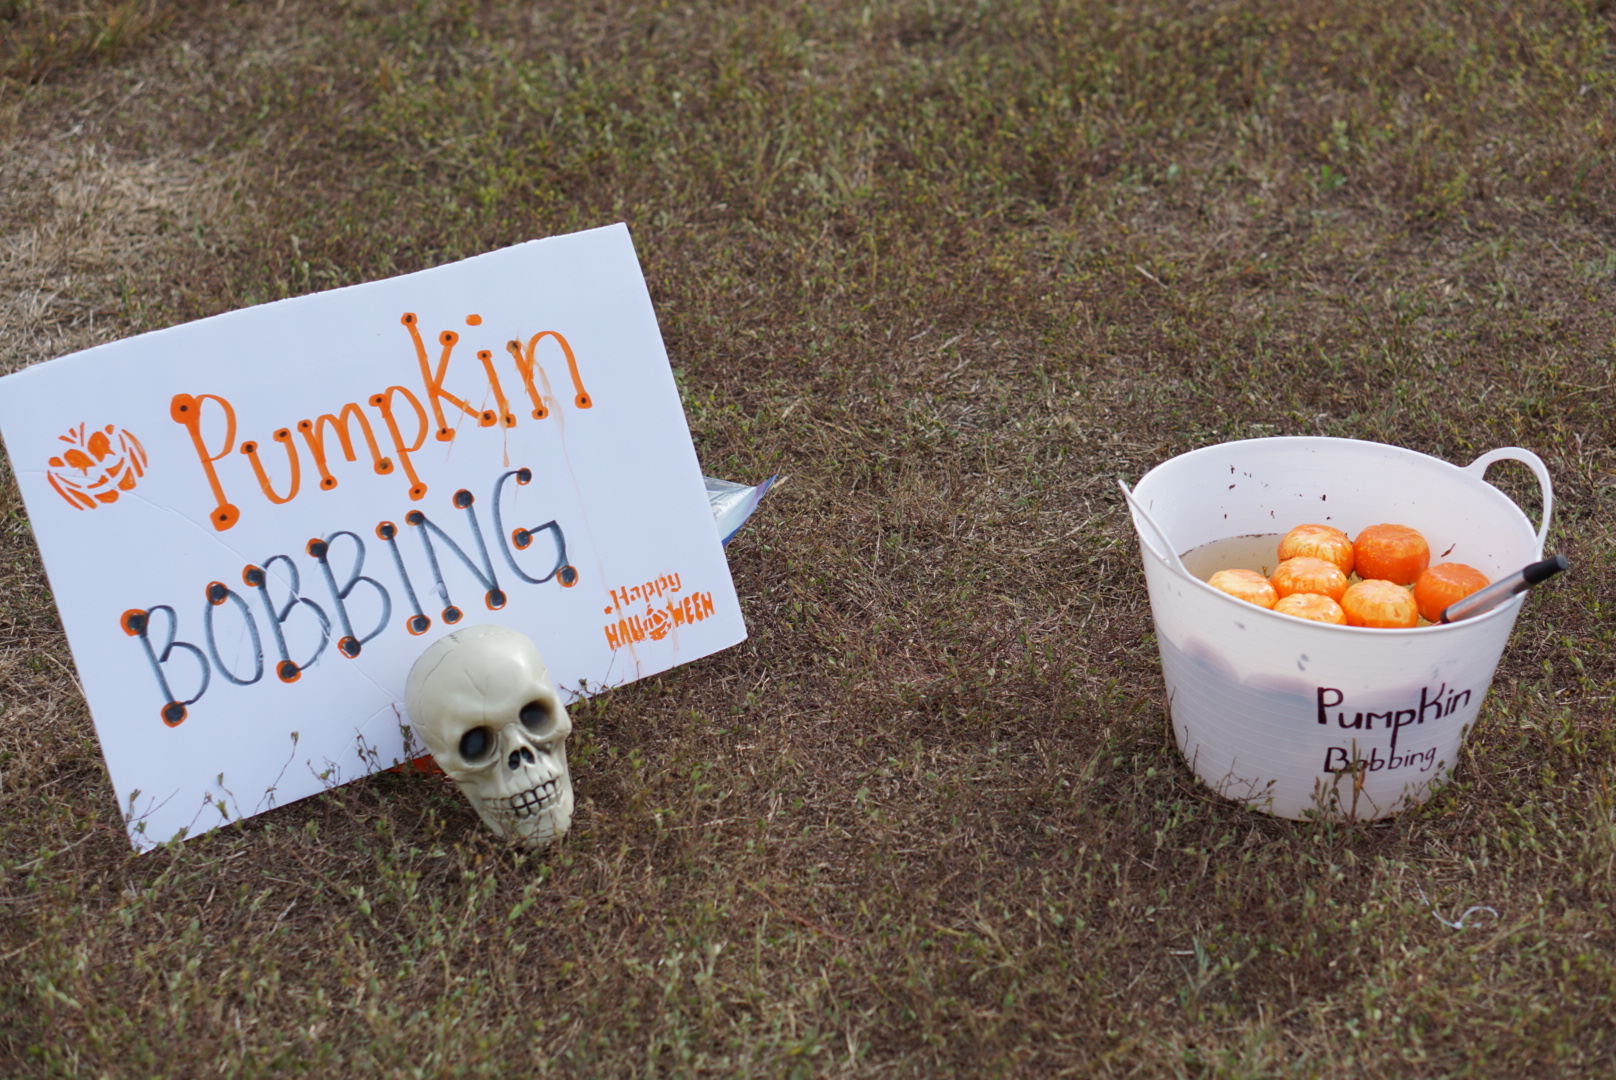 Halloween Games for Kids - Pumpkin Bobbing - Fun Kids Games via Misty Nelson, mom blogger @frostedevents